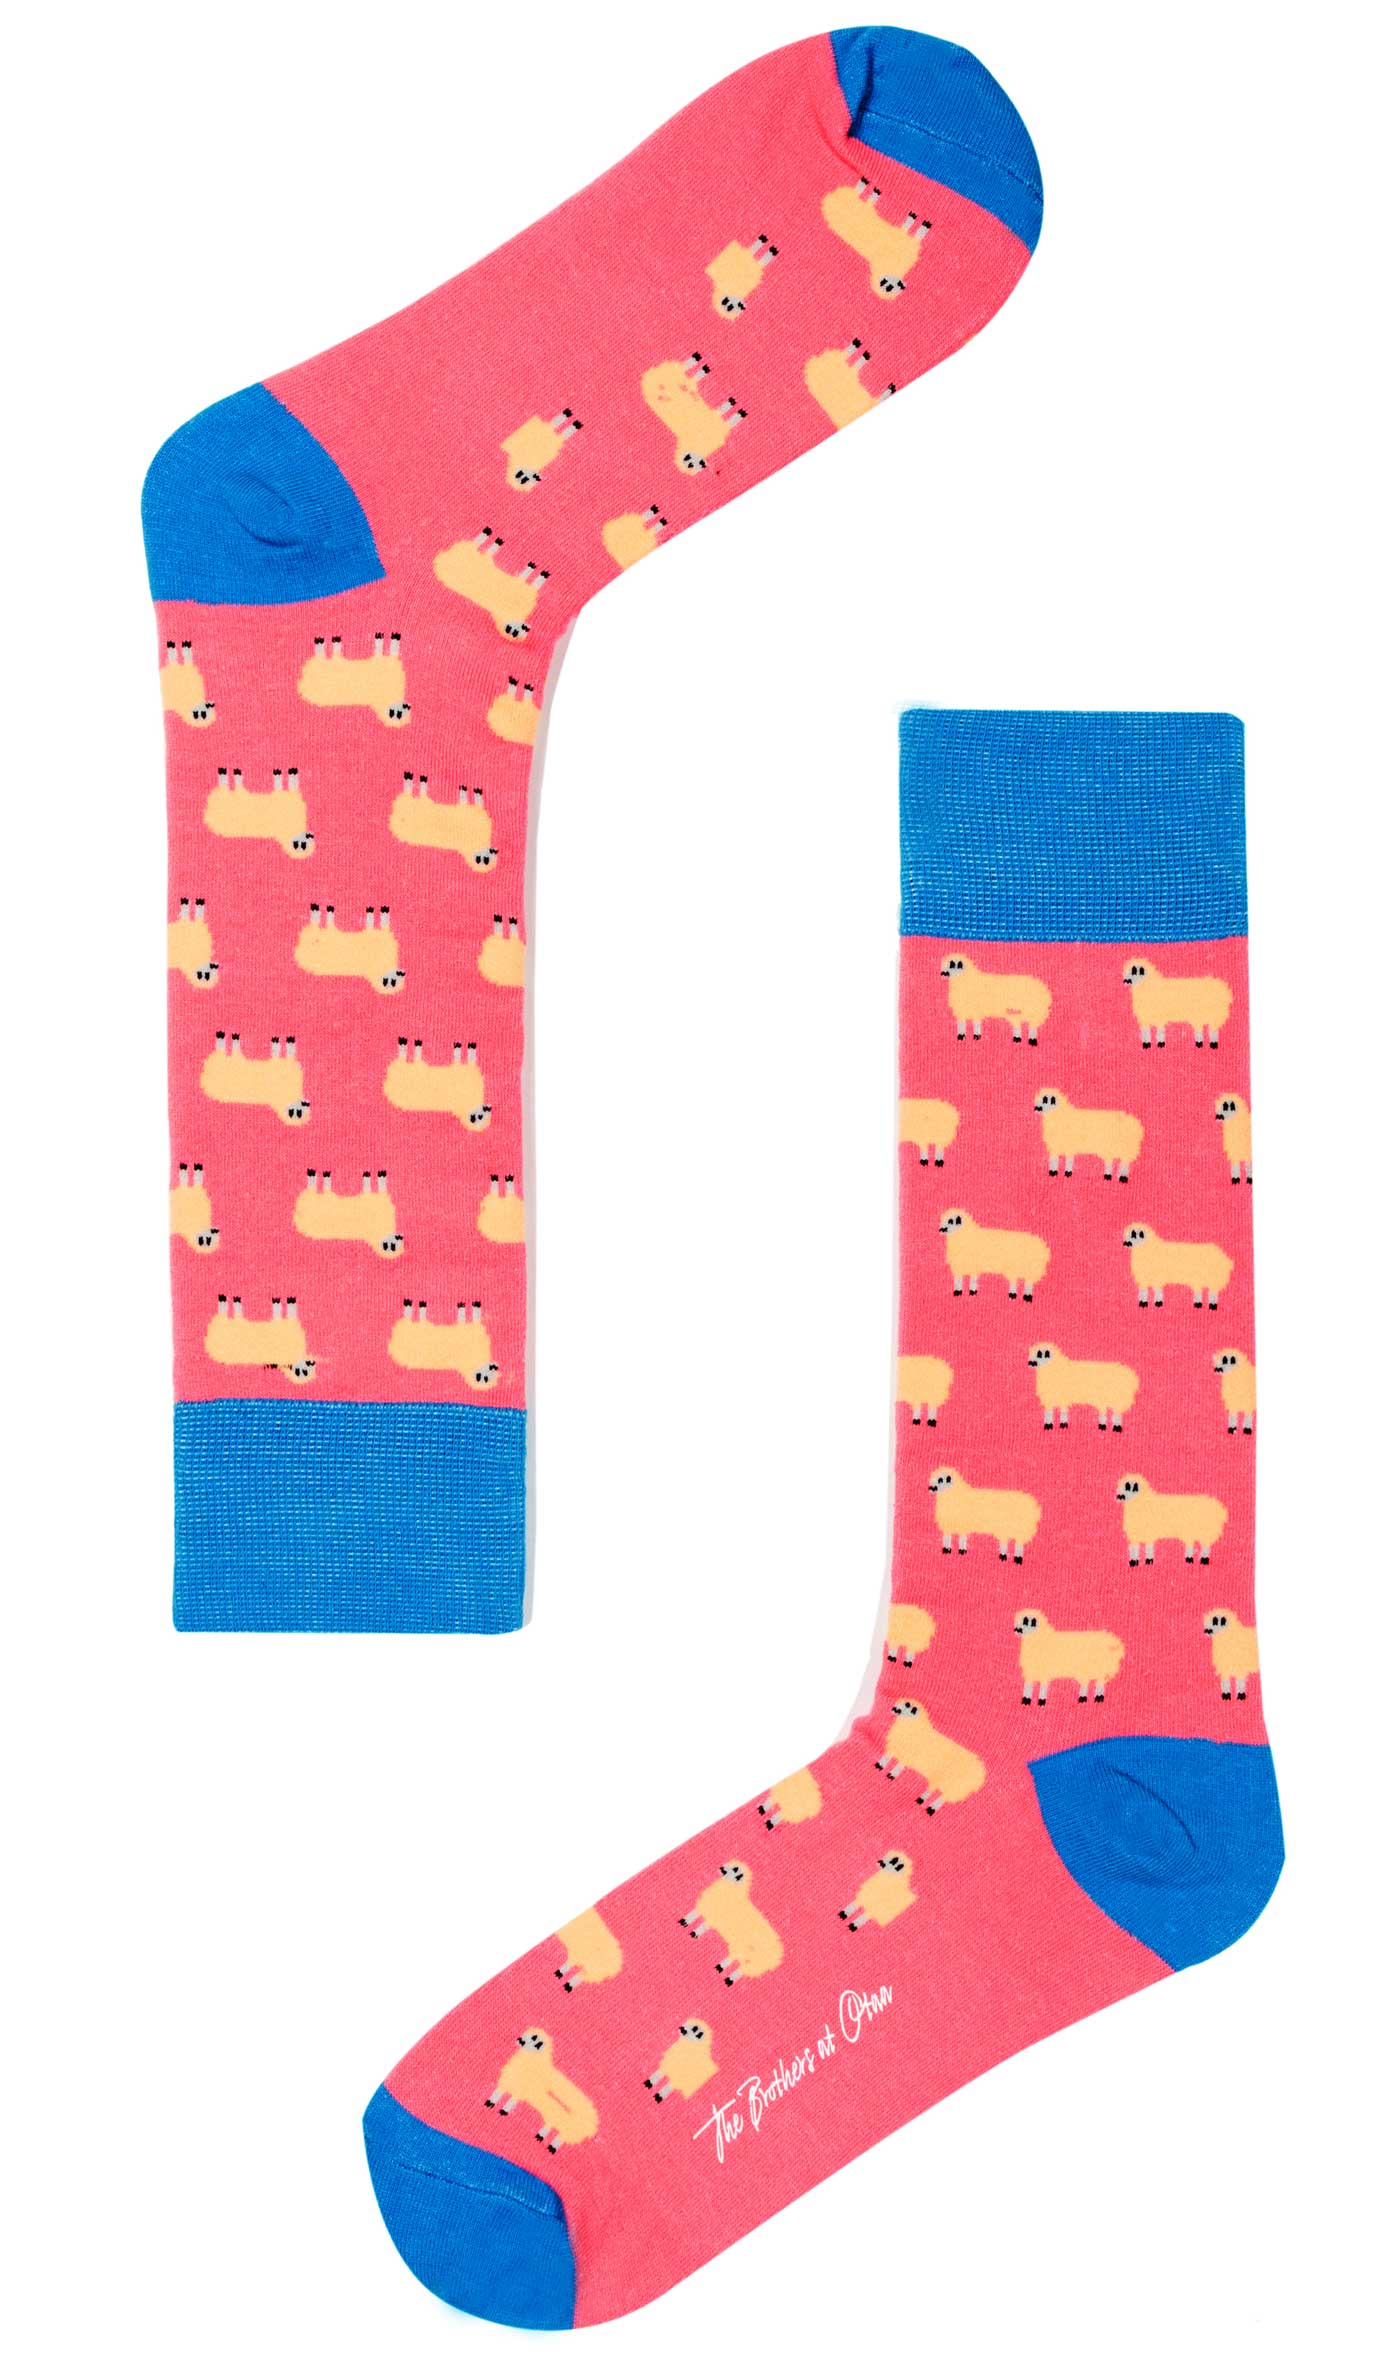 Men’s Socks - Sheep Pink